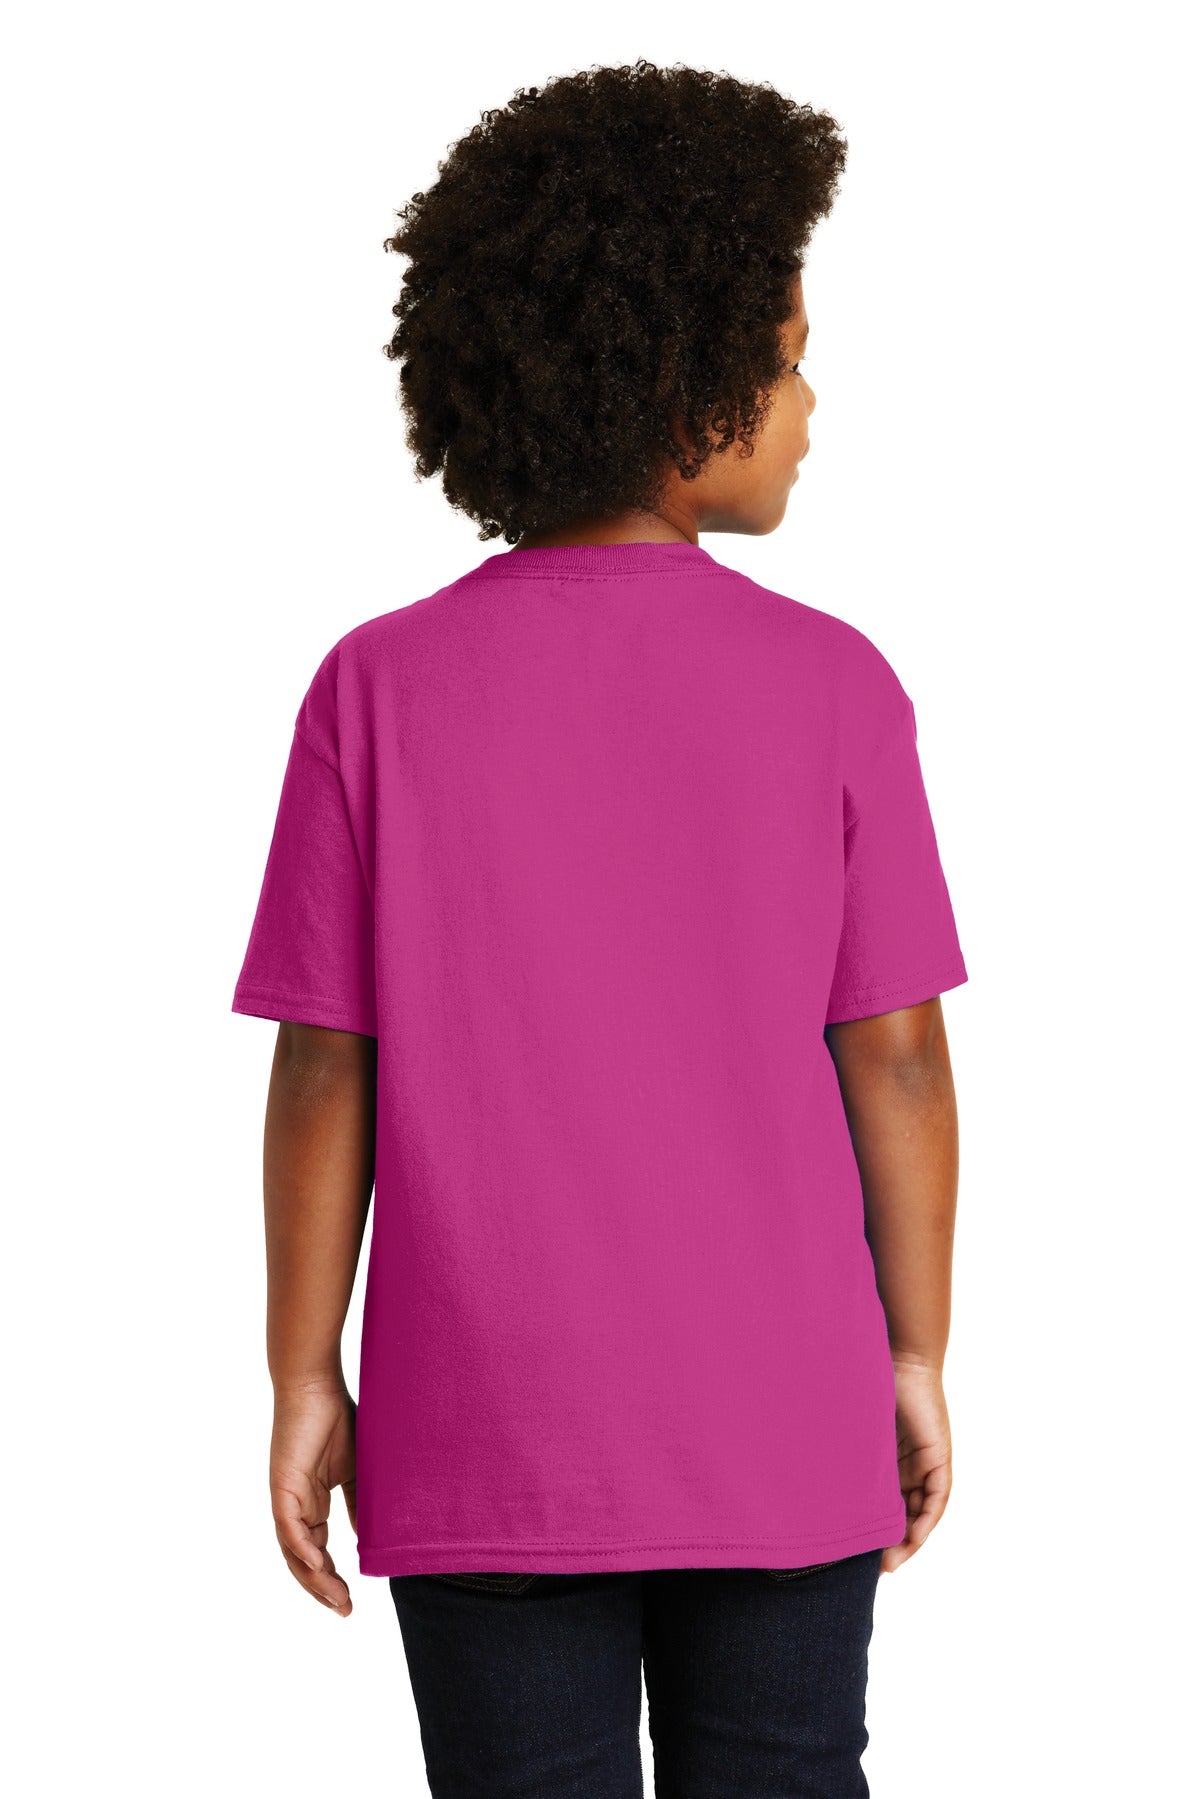 Gildan® - Youth Ultra Cotton®100% US Cotton T-Shirt. 2000B [Heliconia] - DFW Impression